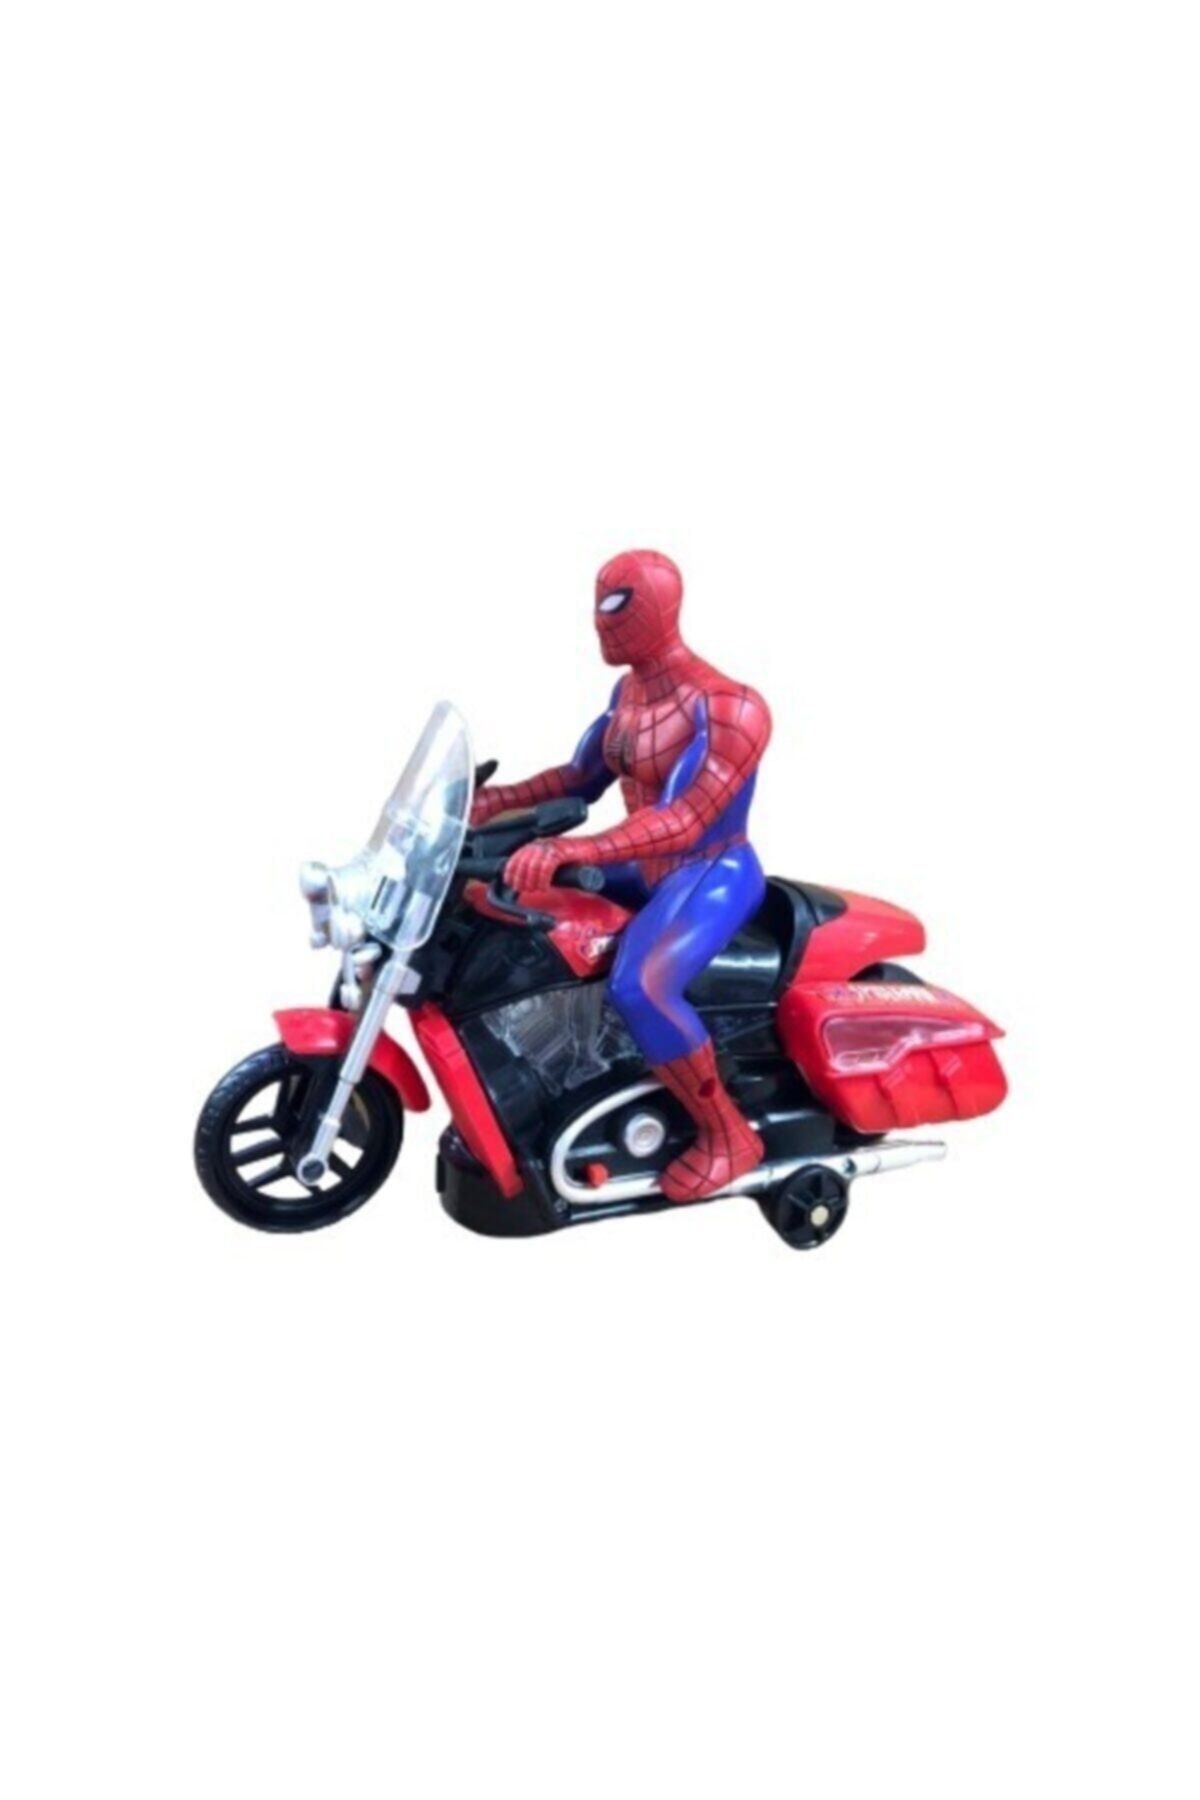 BFY TOYS Medska Spiderman Pilli Işıklı Motorlu Örümcek Adam , Spıderman , Motar, Motorsiklet Y058